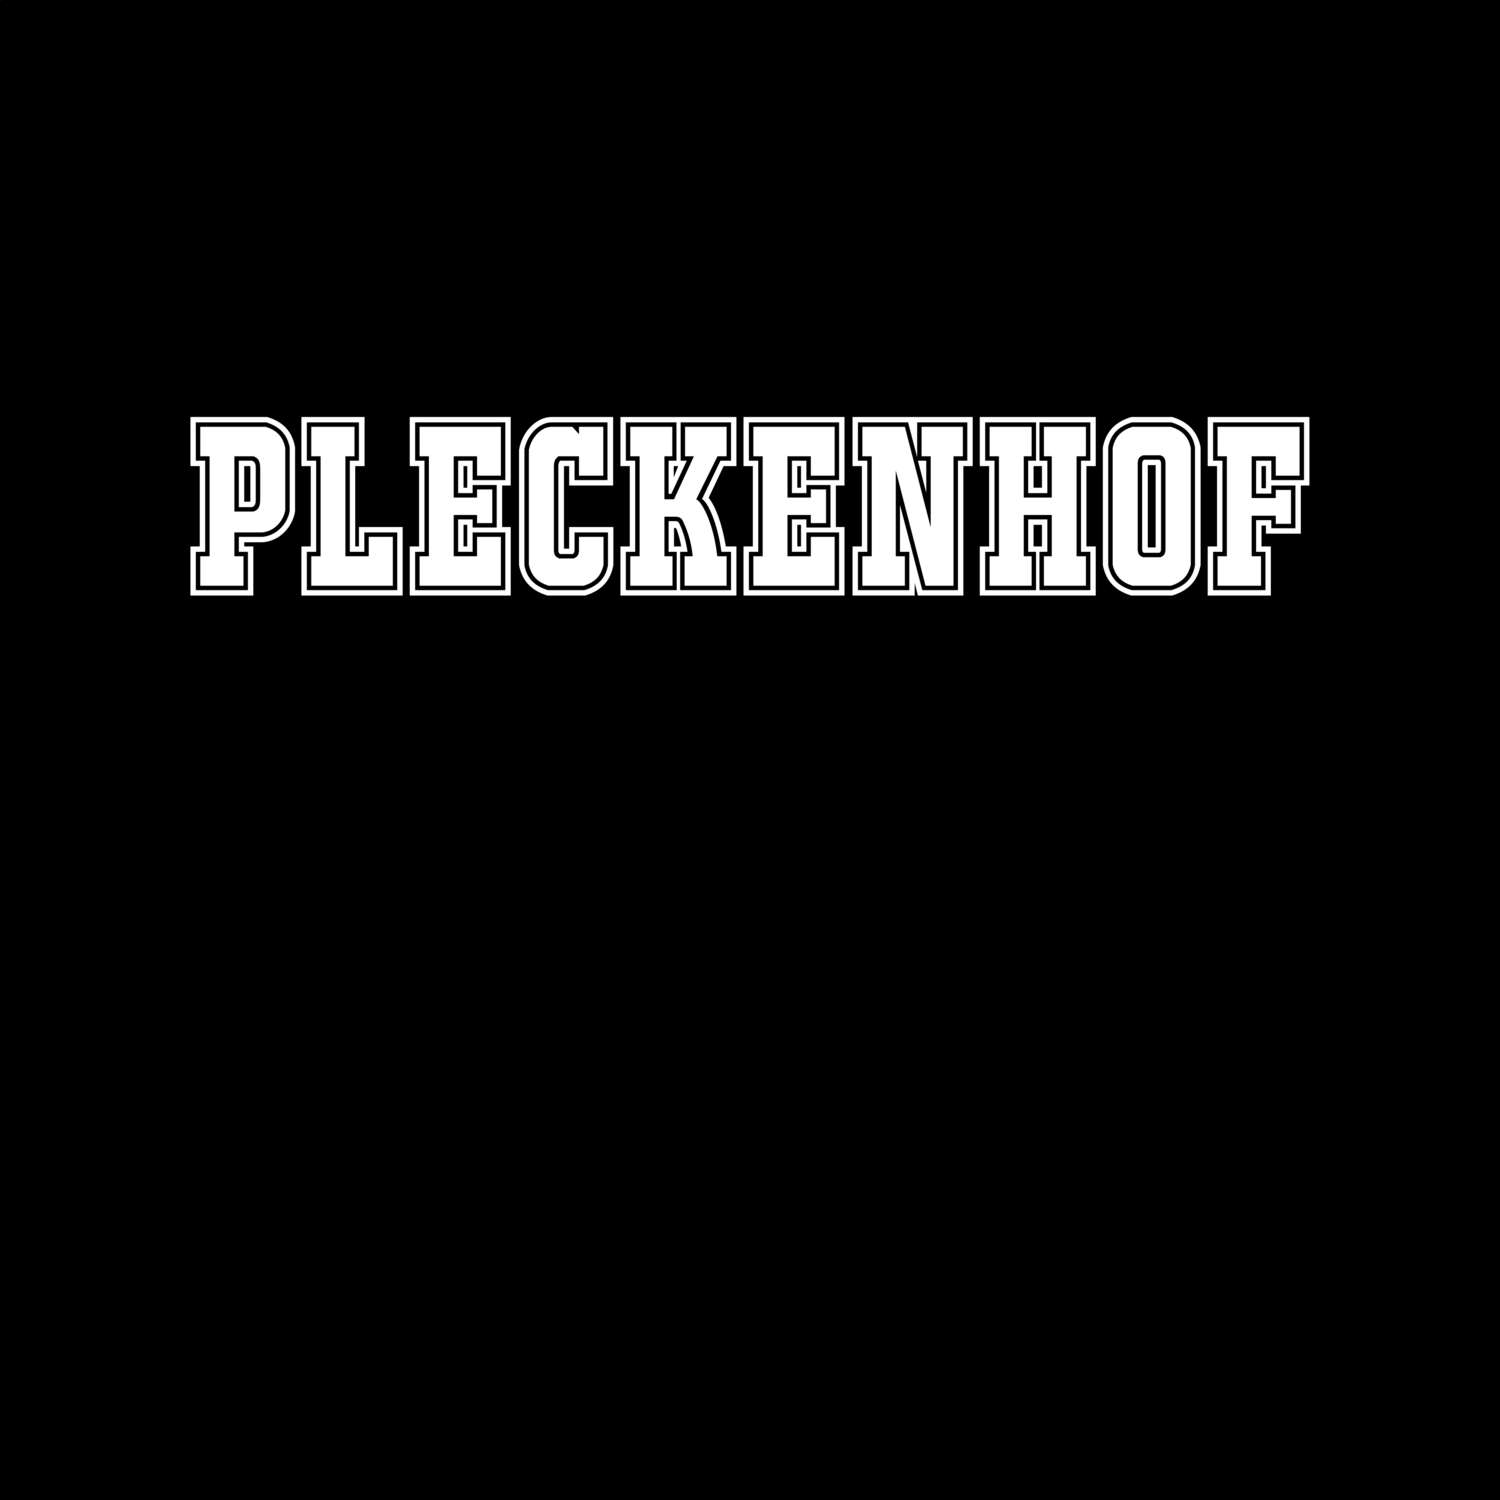 Pleckenhof T-Shirt »Classic«